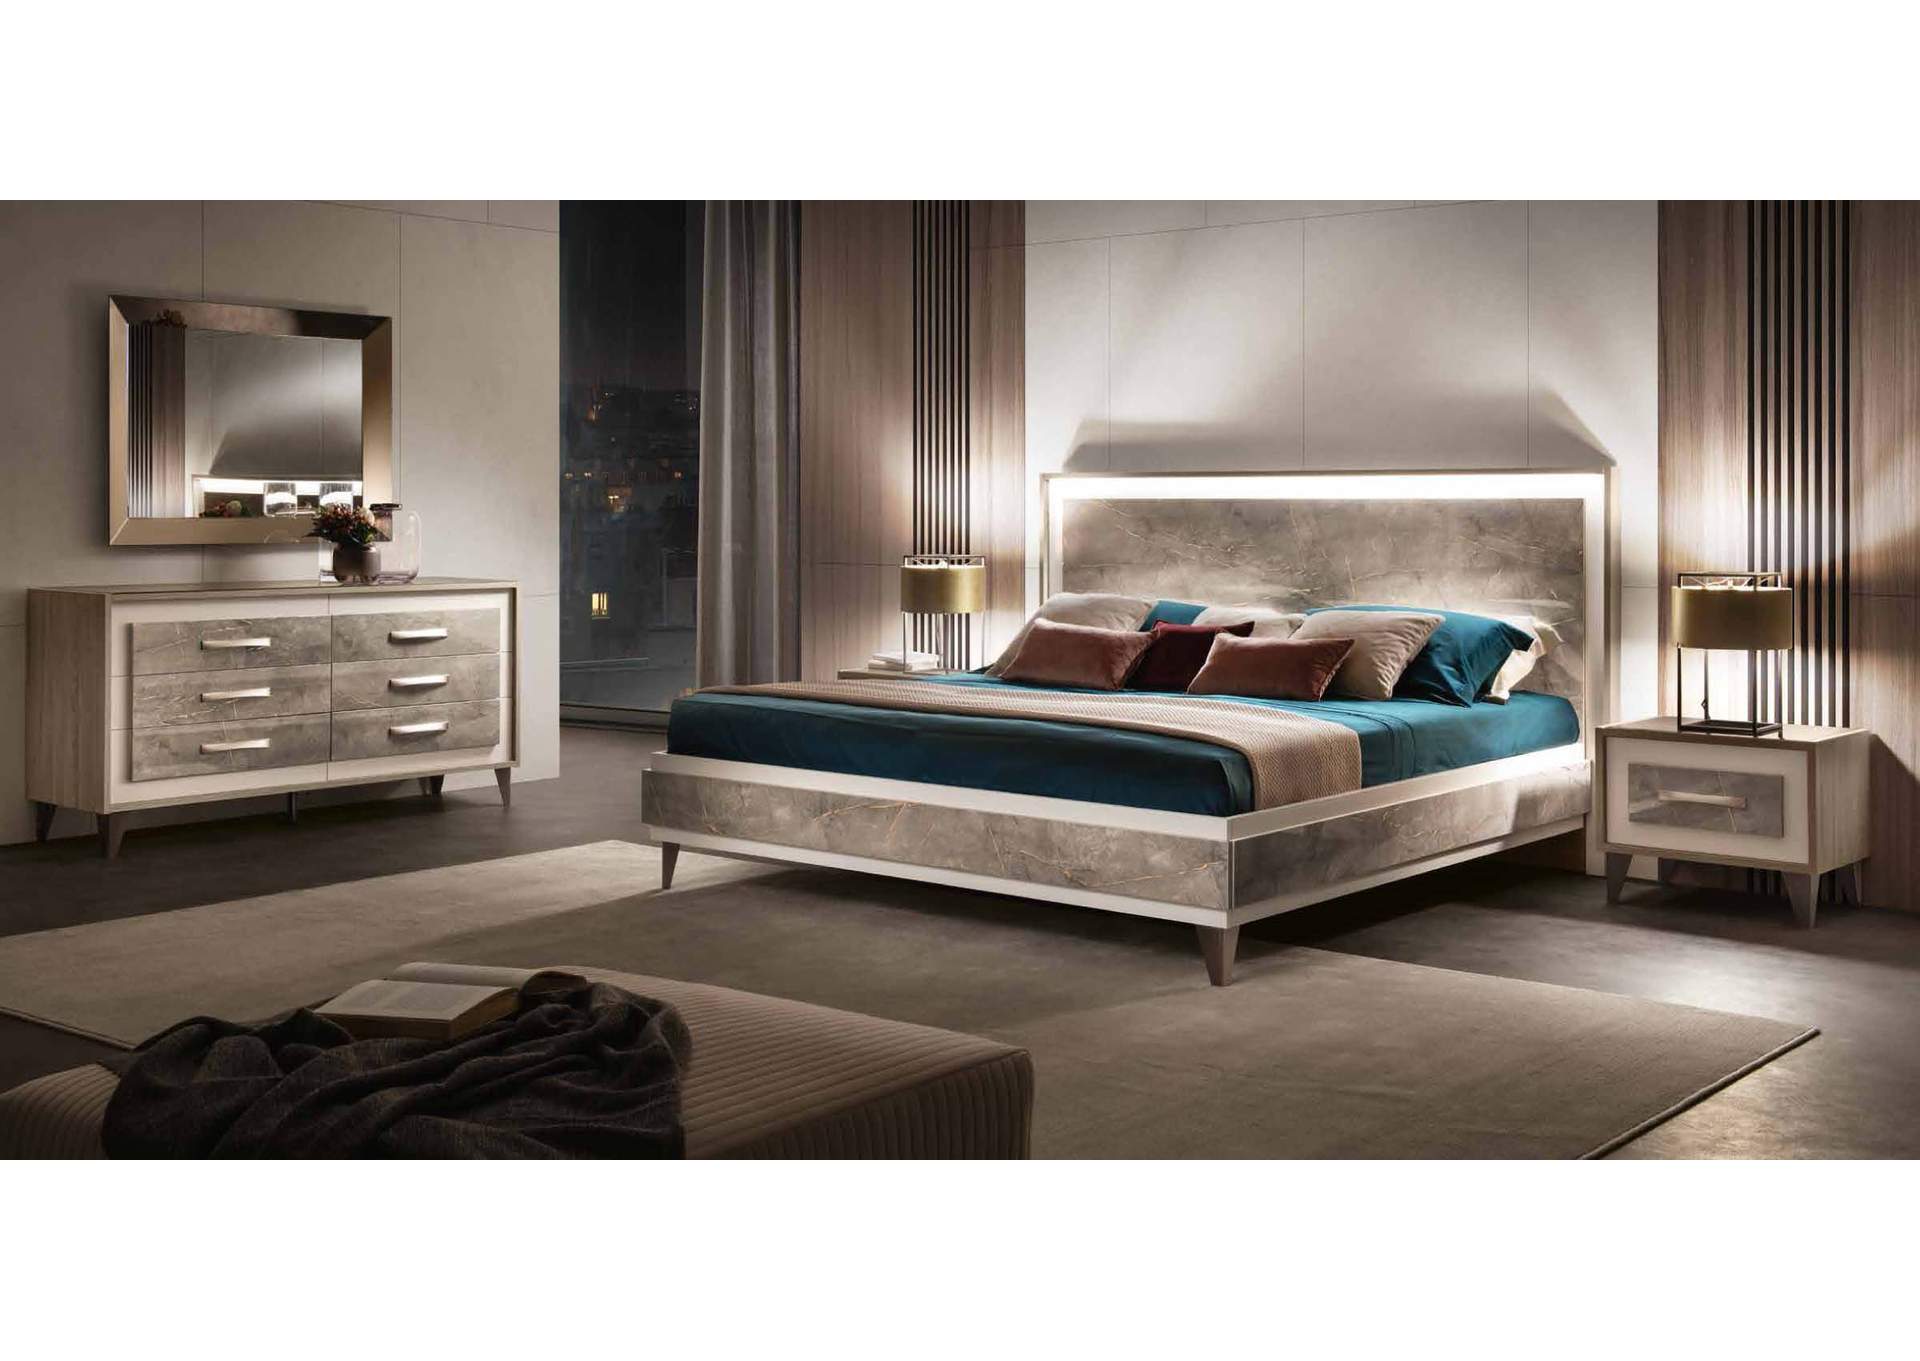 Arredoambra Bedroom By Arredo Classic with Double Dresser SET,ESF Wholesale Furniture